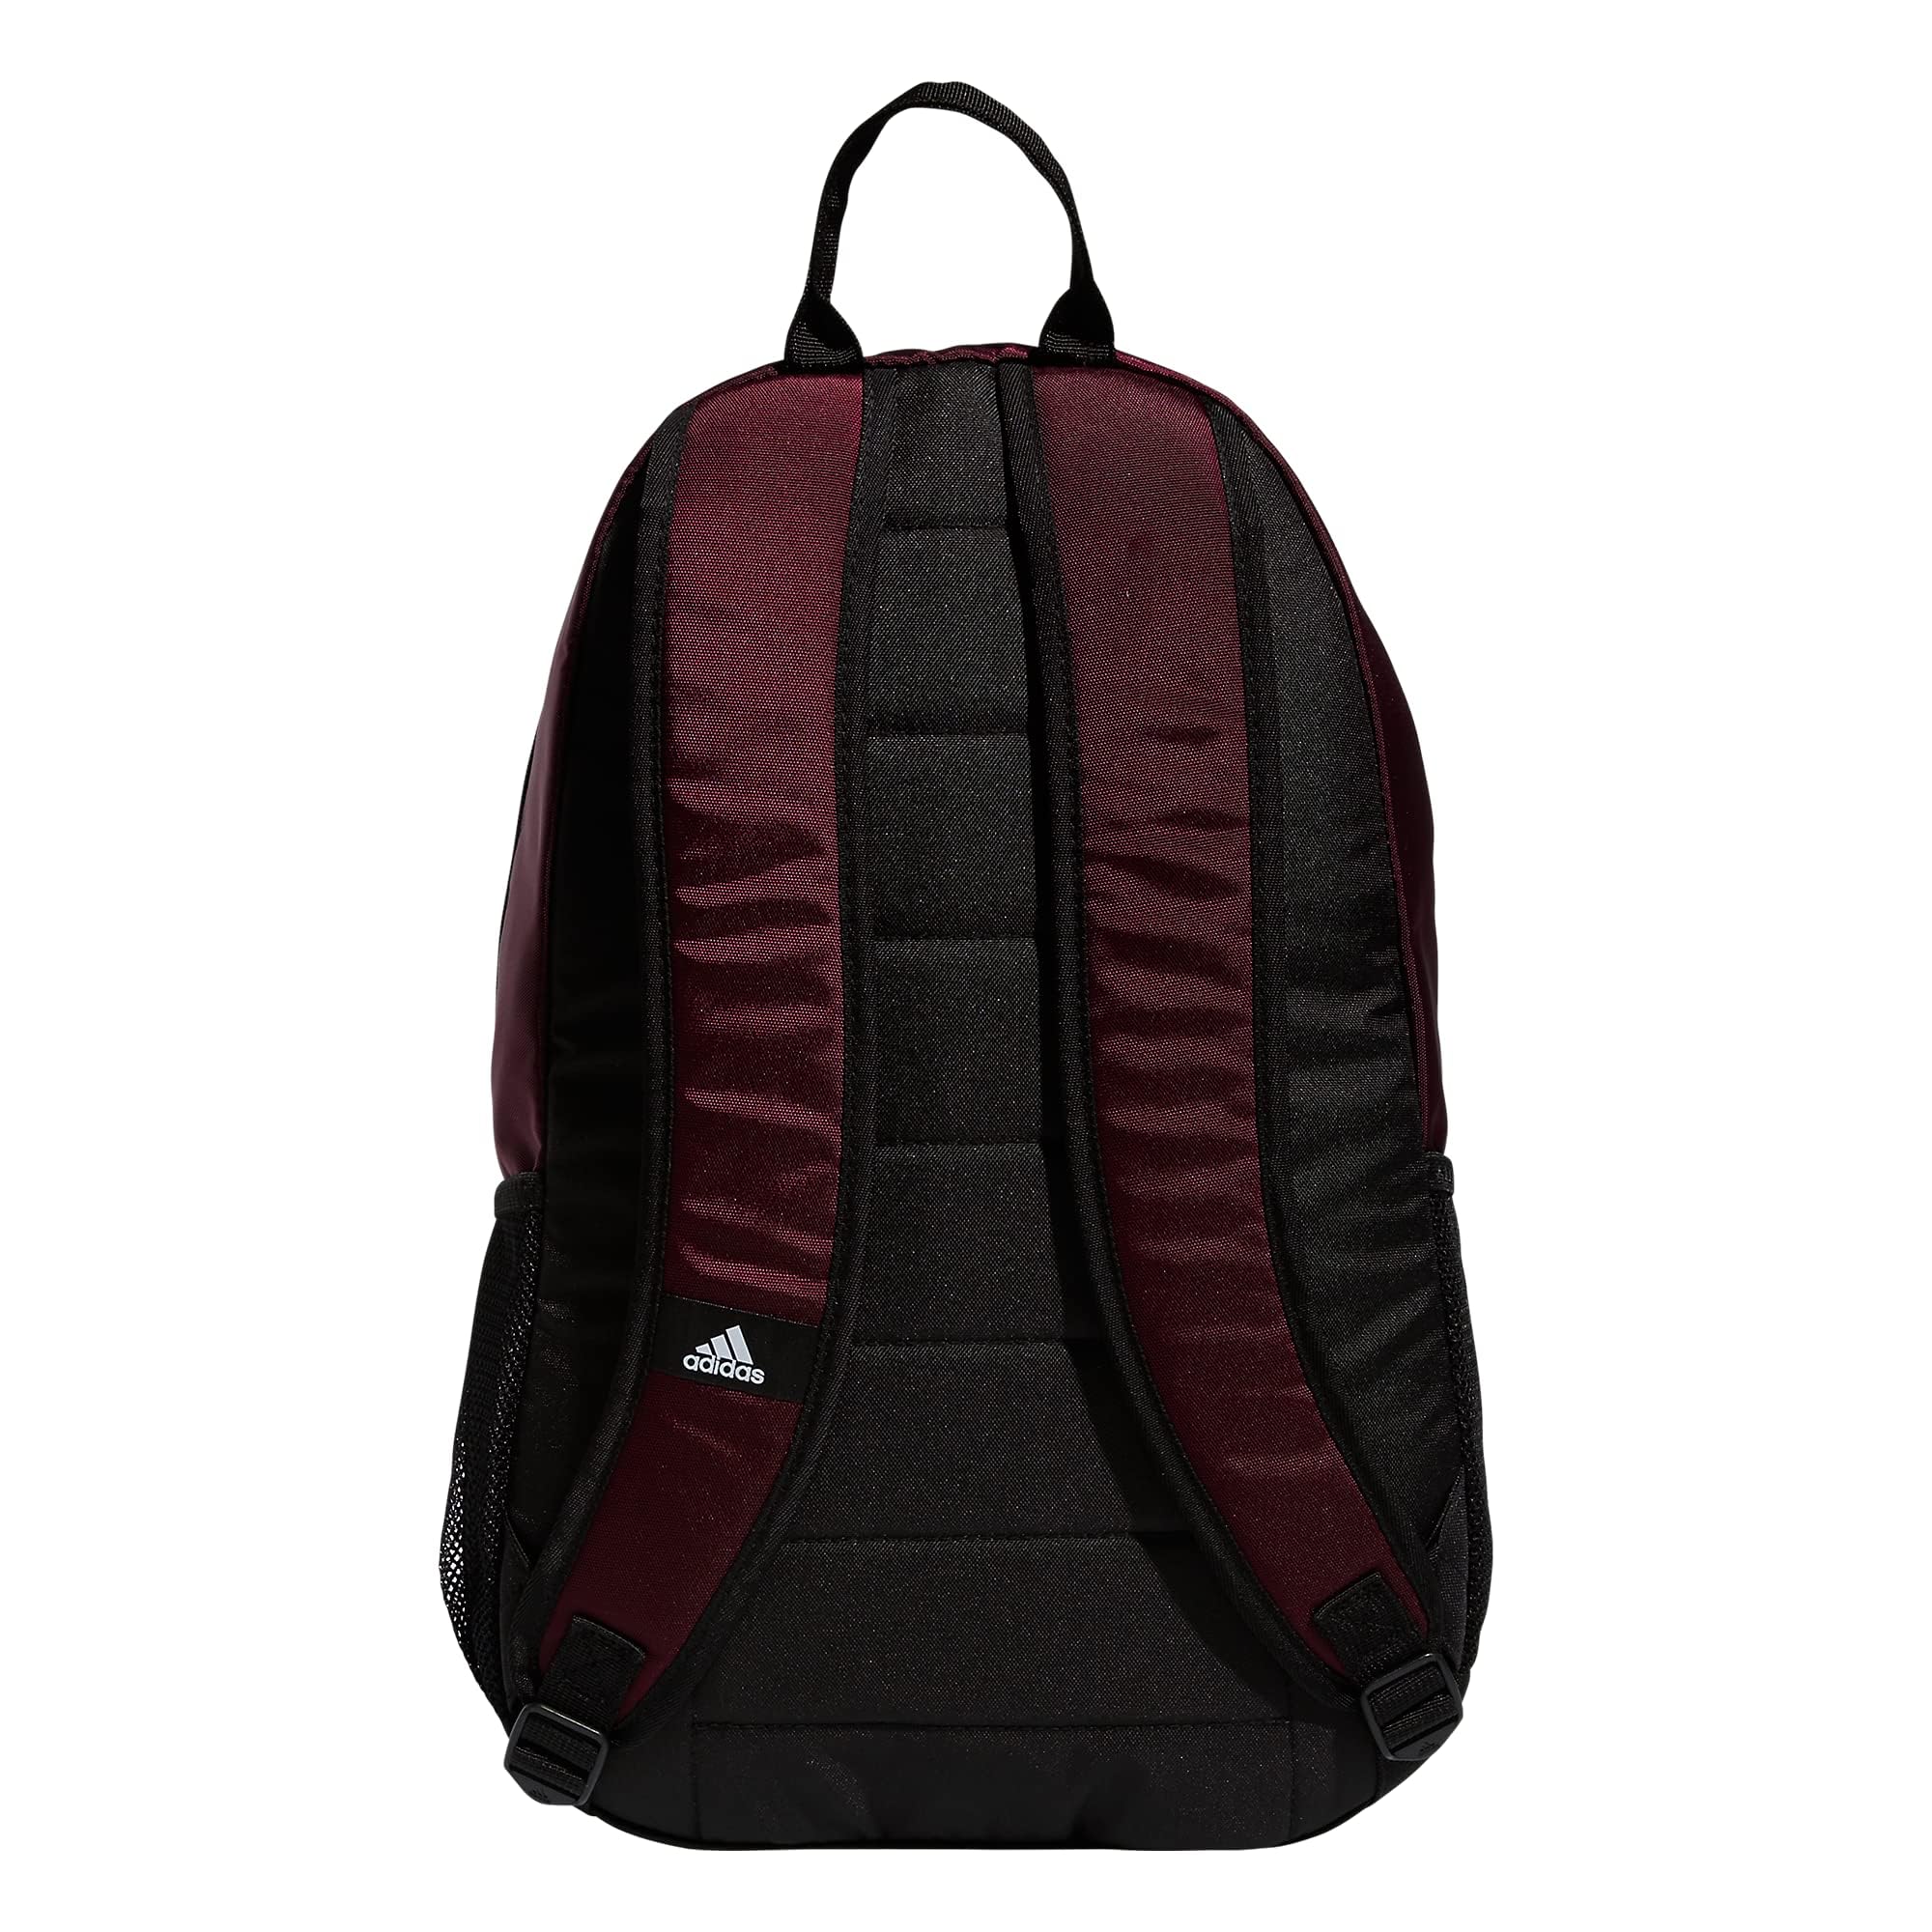 adidas Striker 2 Backpack, Team Maroon/Black/White, One Size